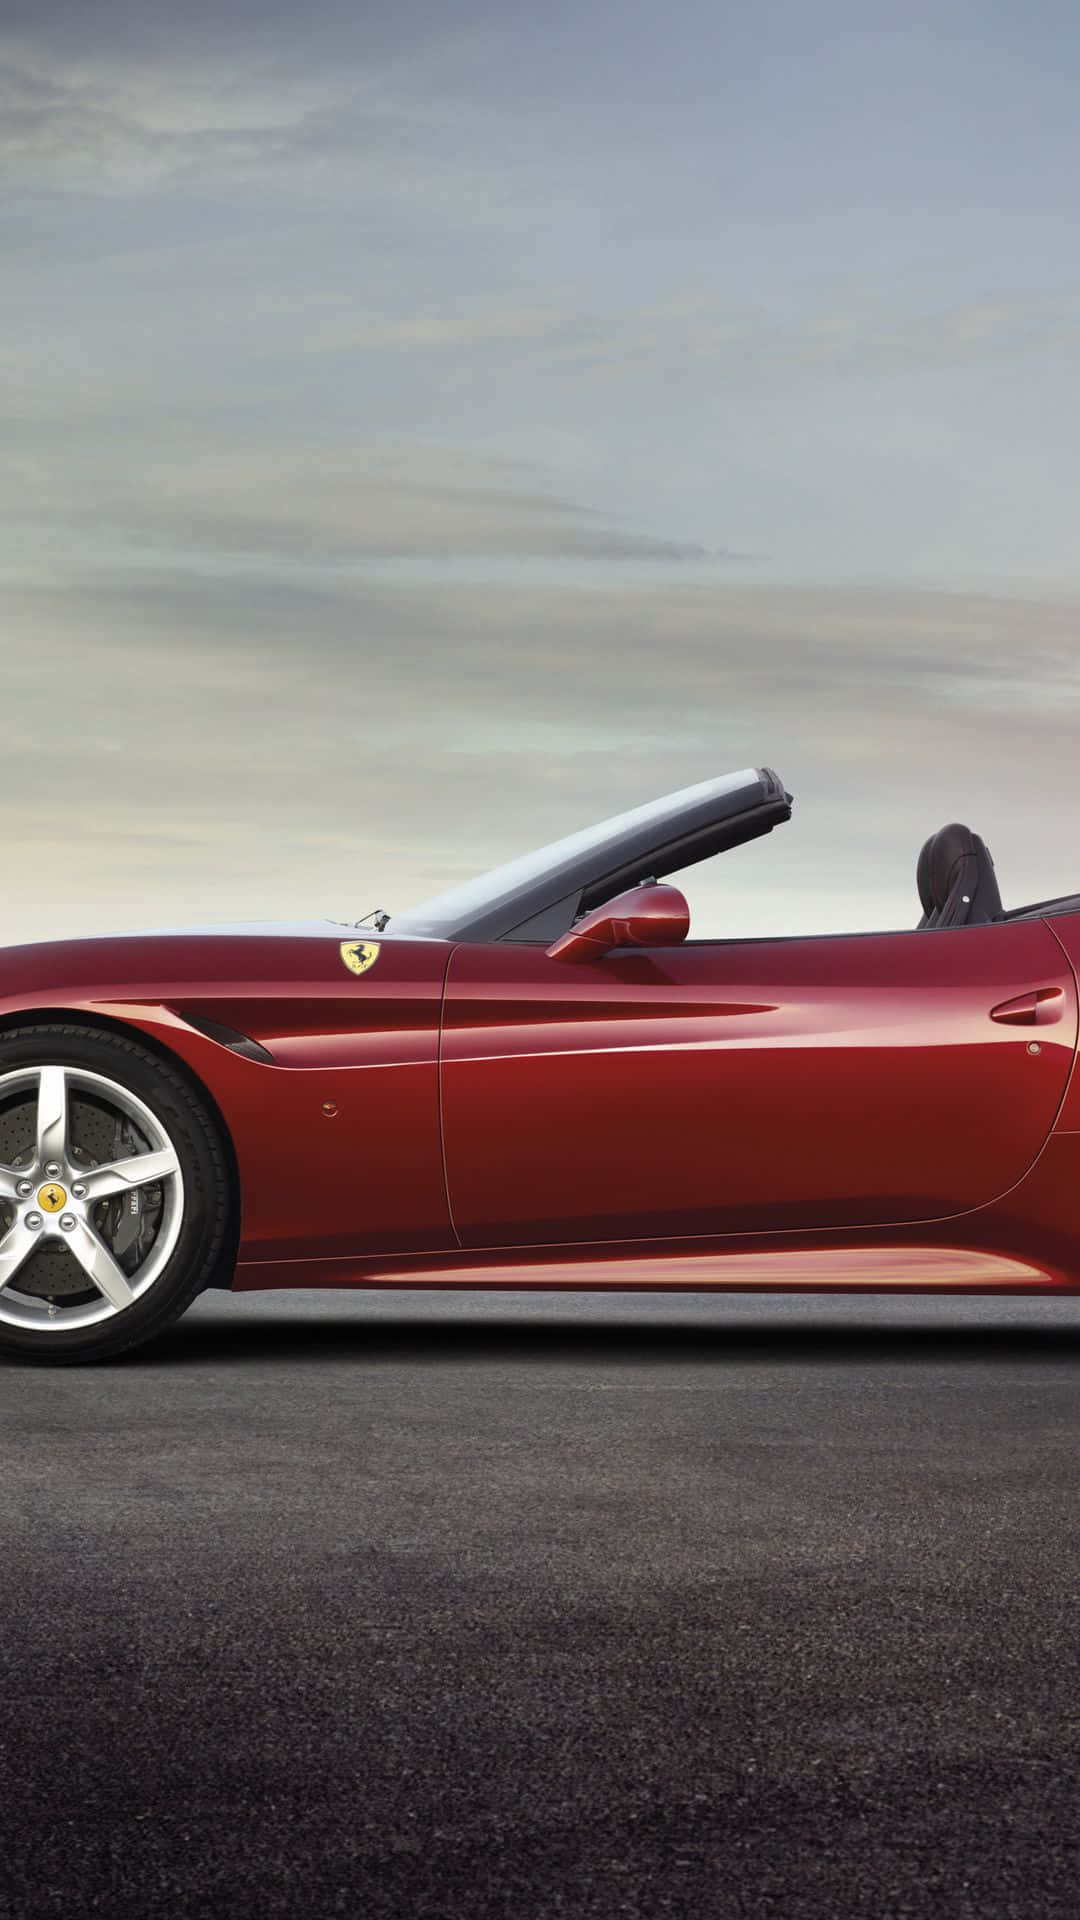 Caption: Sleek and Stylish Ferrari California T Wallpaper